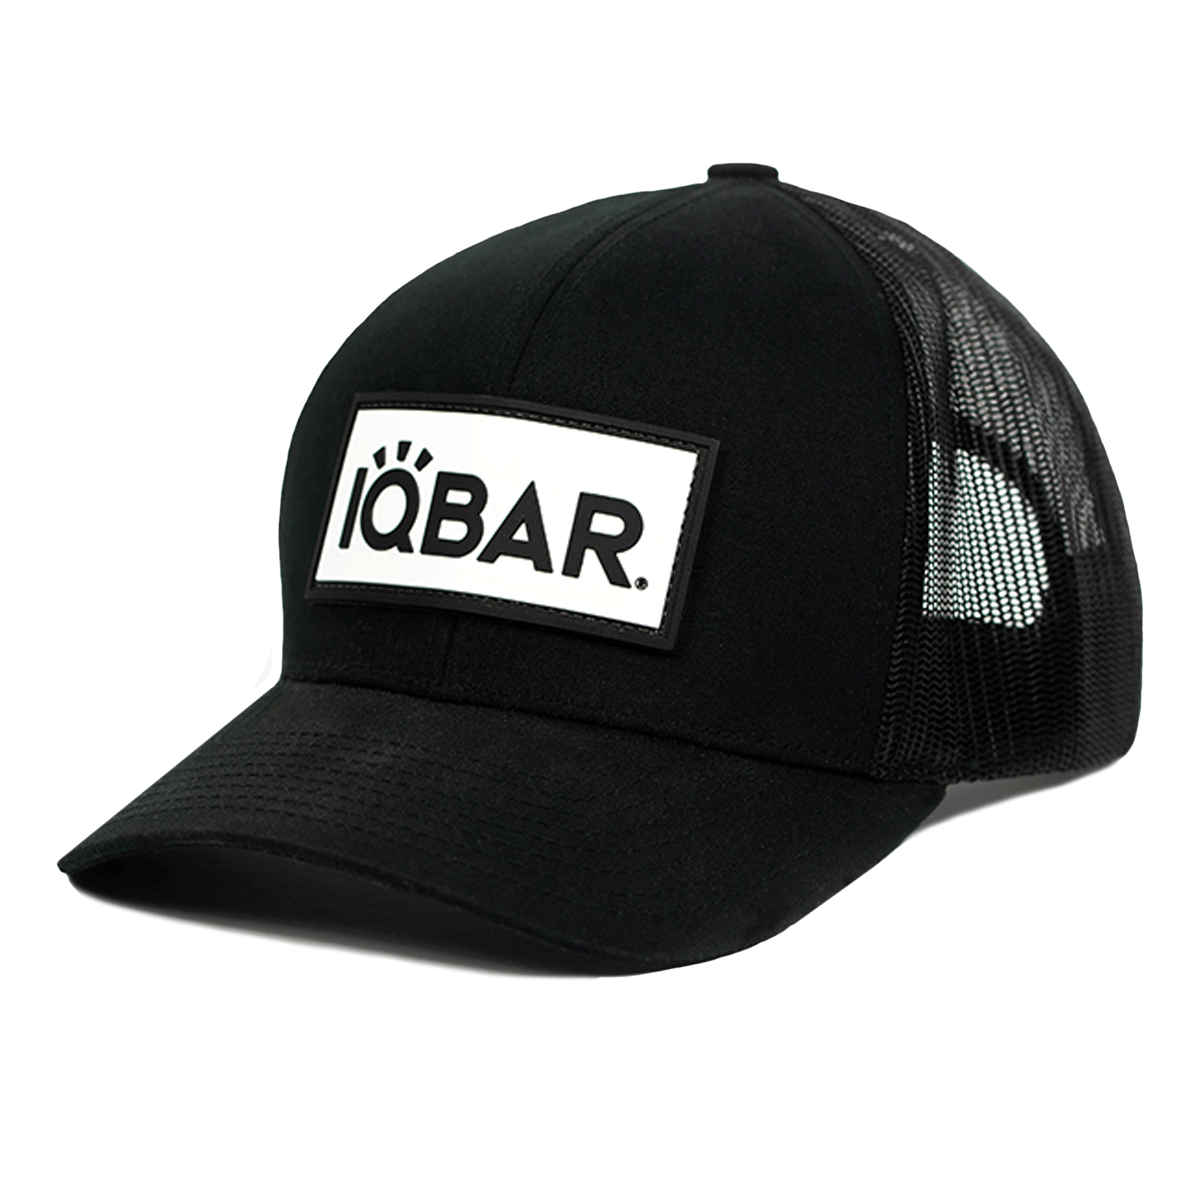 IQBAR Rubber Patch Trucker Hat